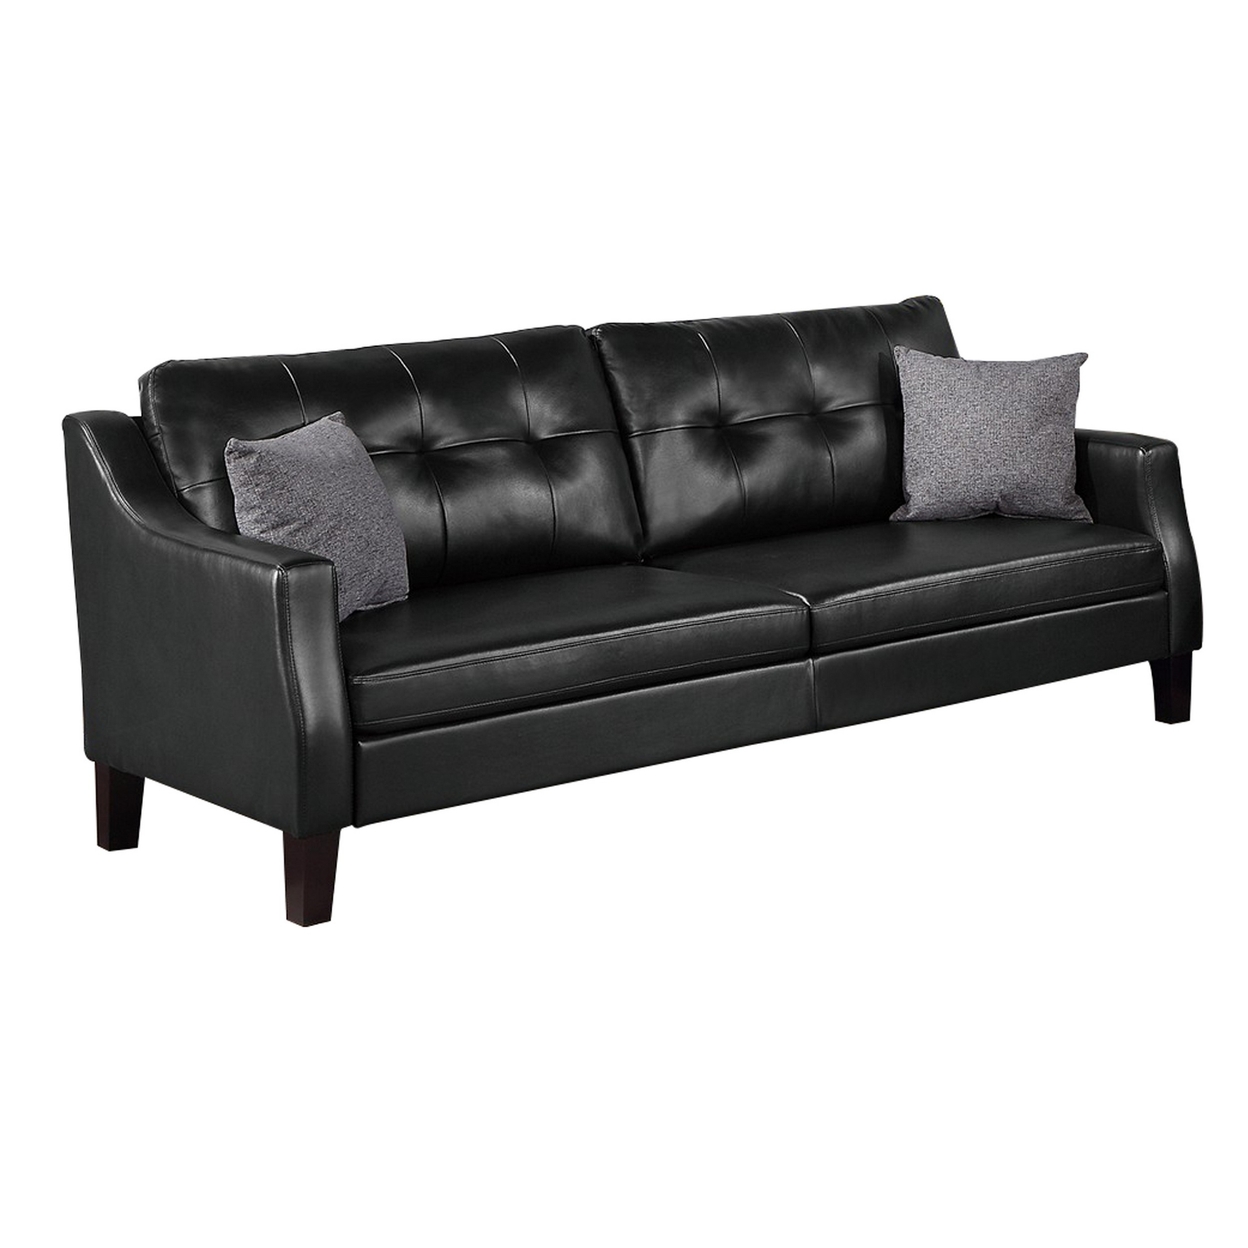 Hera 2 Piece Sofa And Loveseat Set, 4 Pillows, Classic Black Faux Leather- Saltoro Sherpi